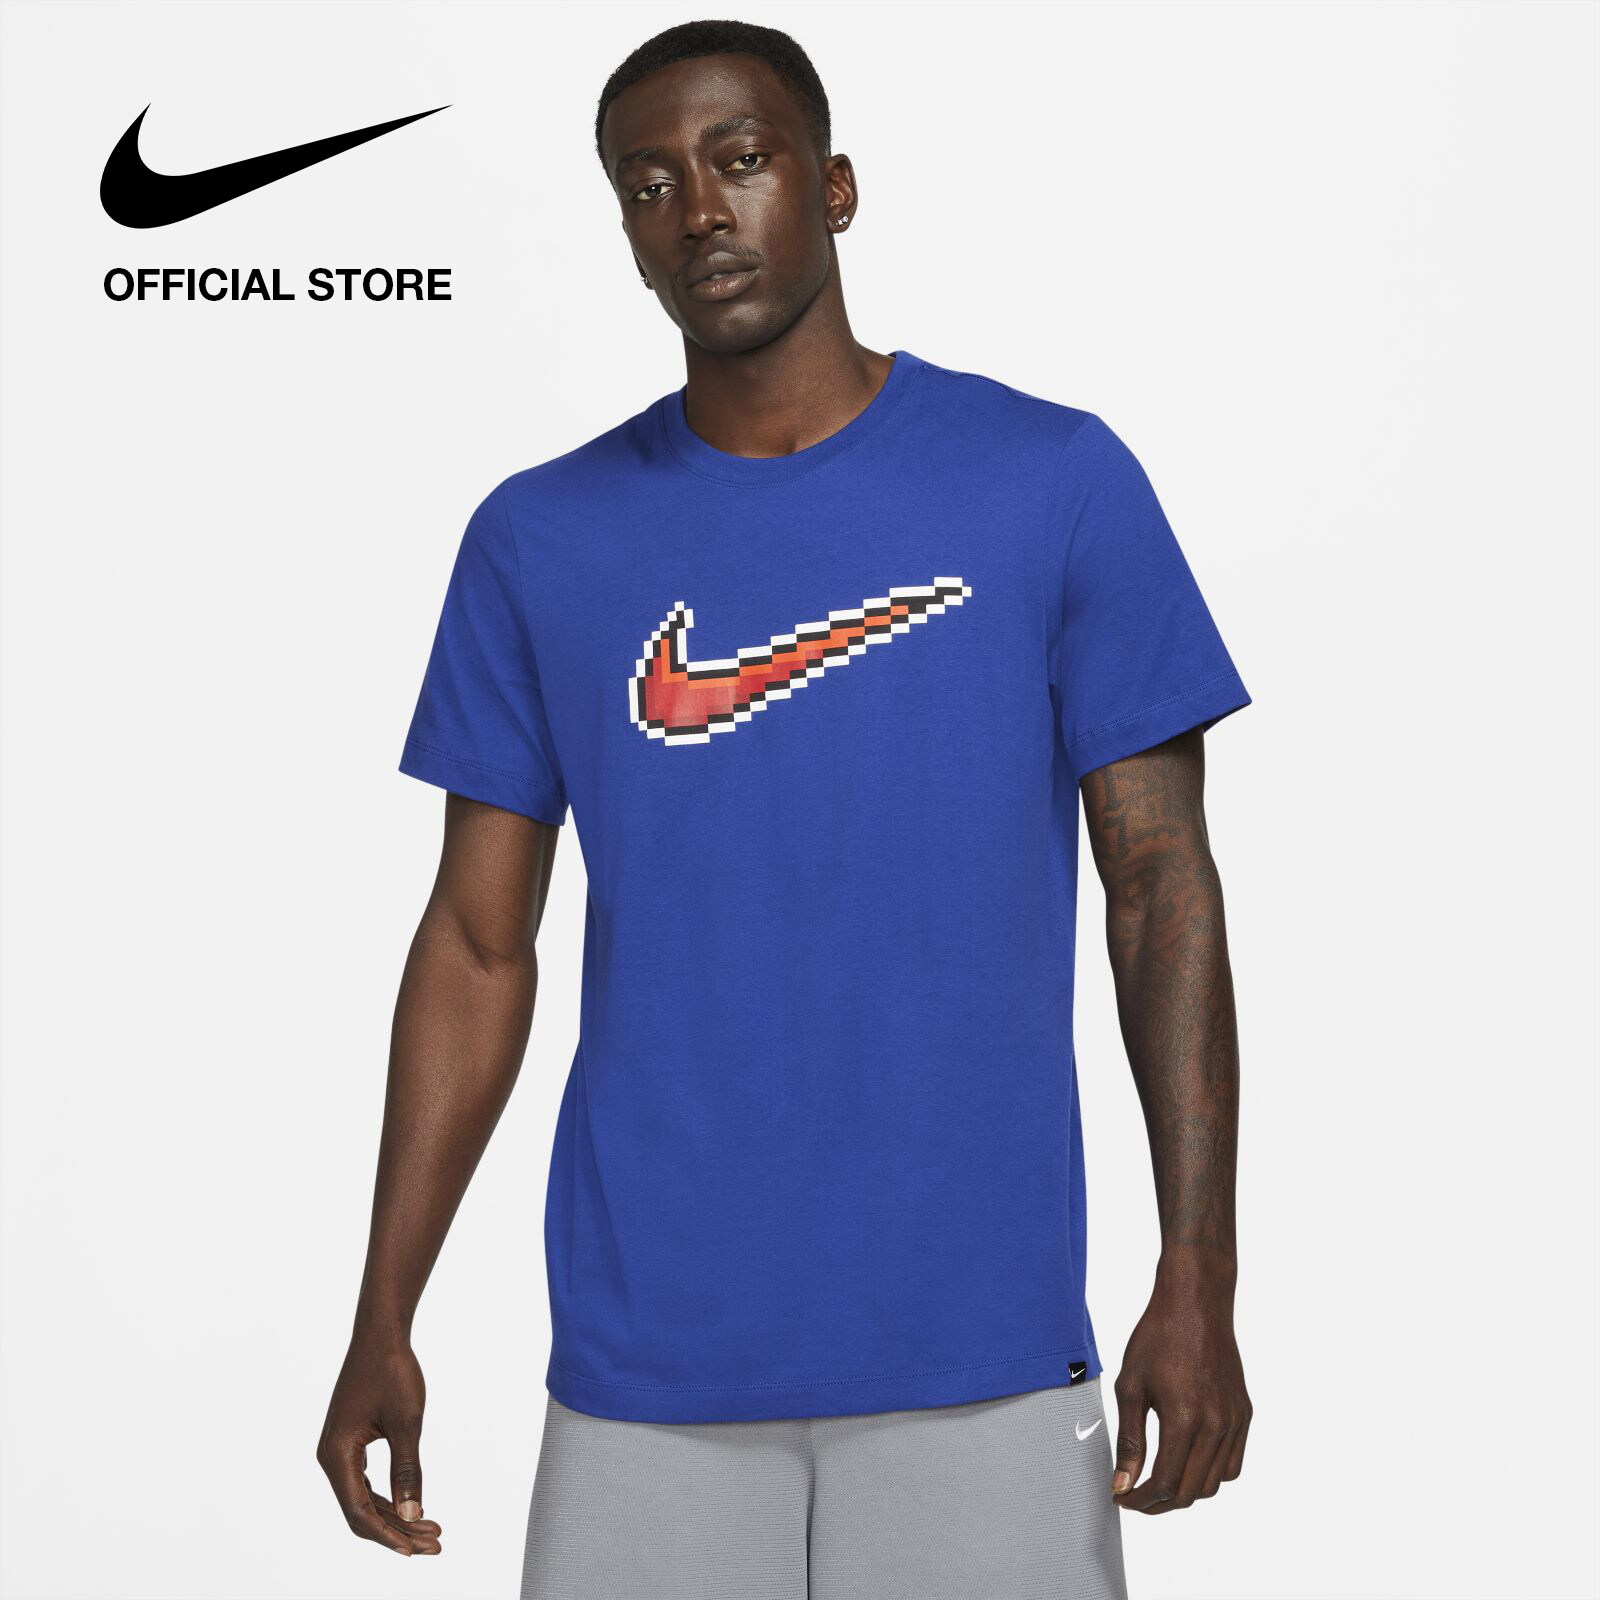 Nike Men's Swoosh T-Shirt - Blue เสื้อยืดผู้ชาย Nike Swoosh - สีฟ้า